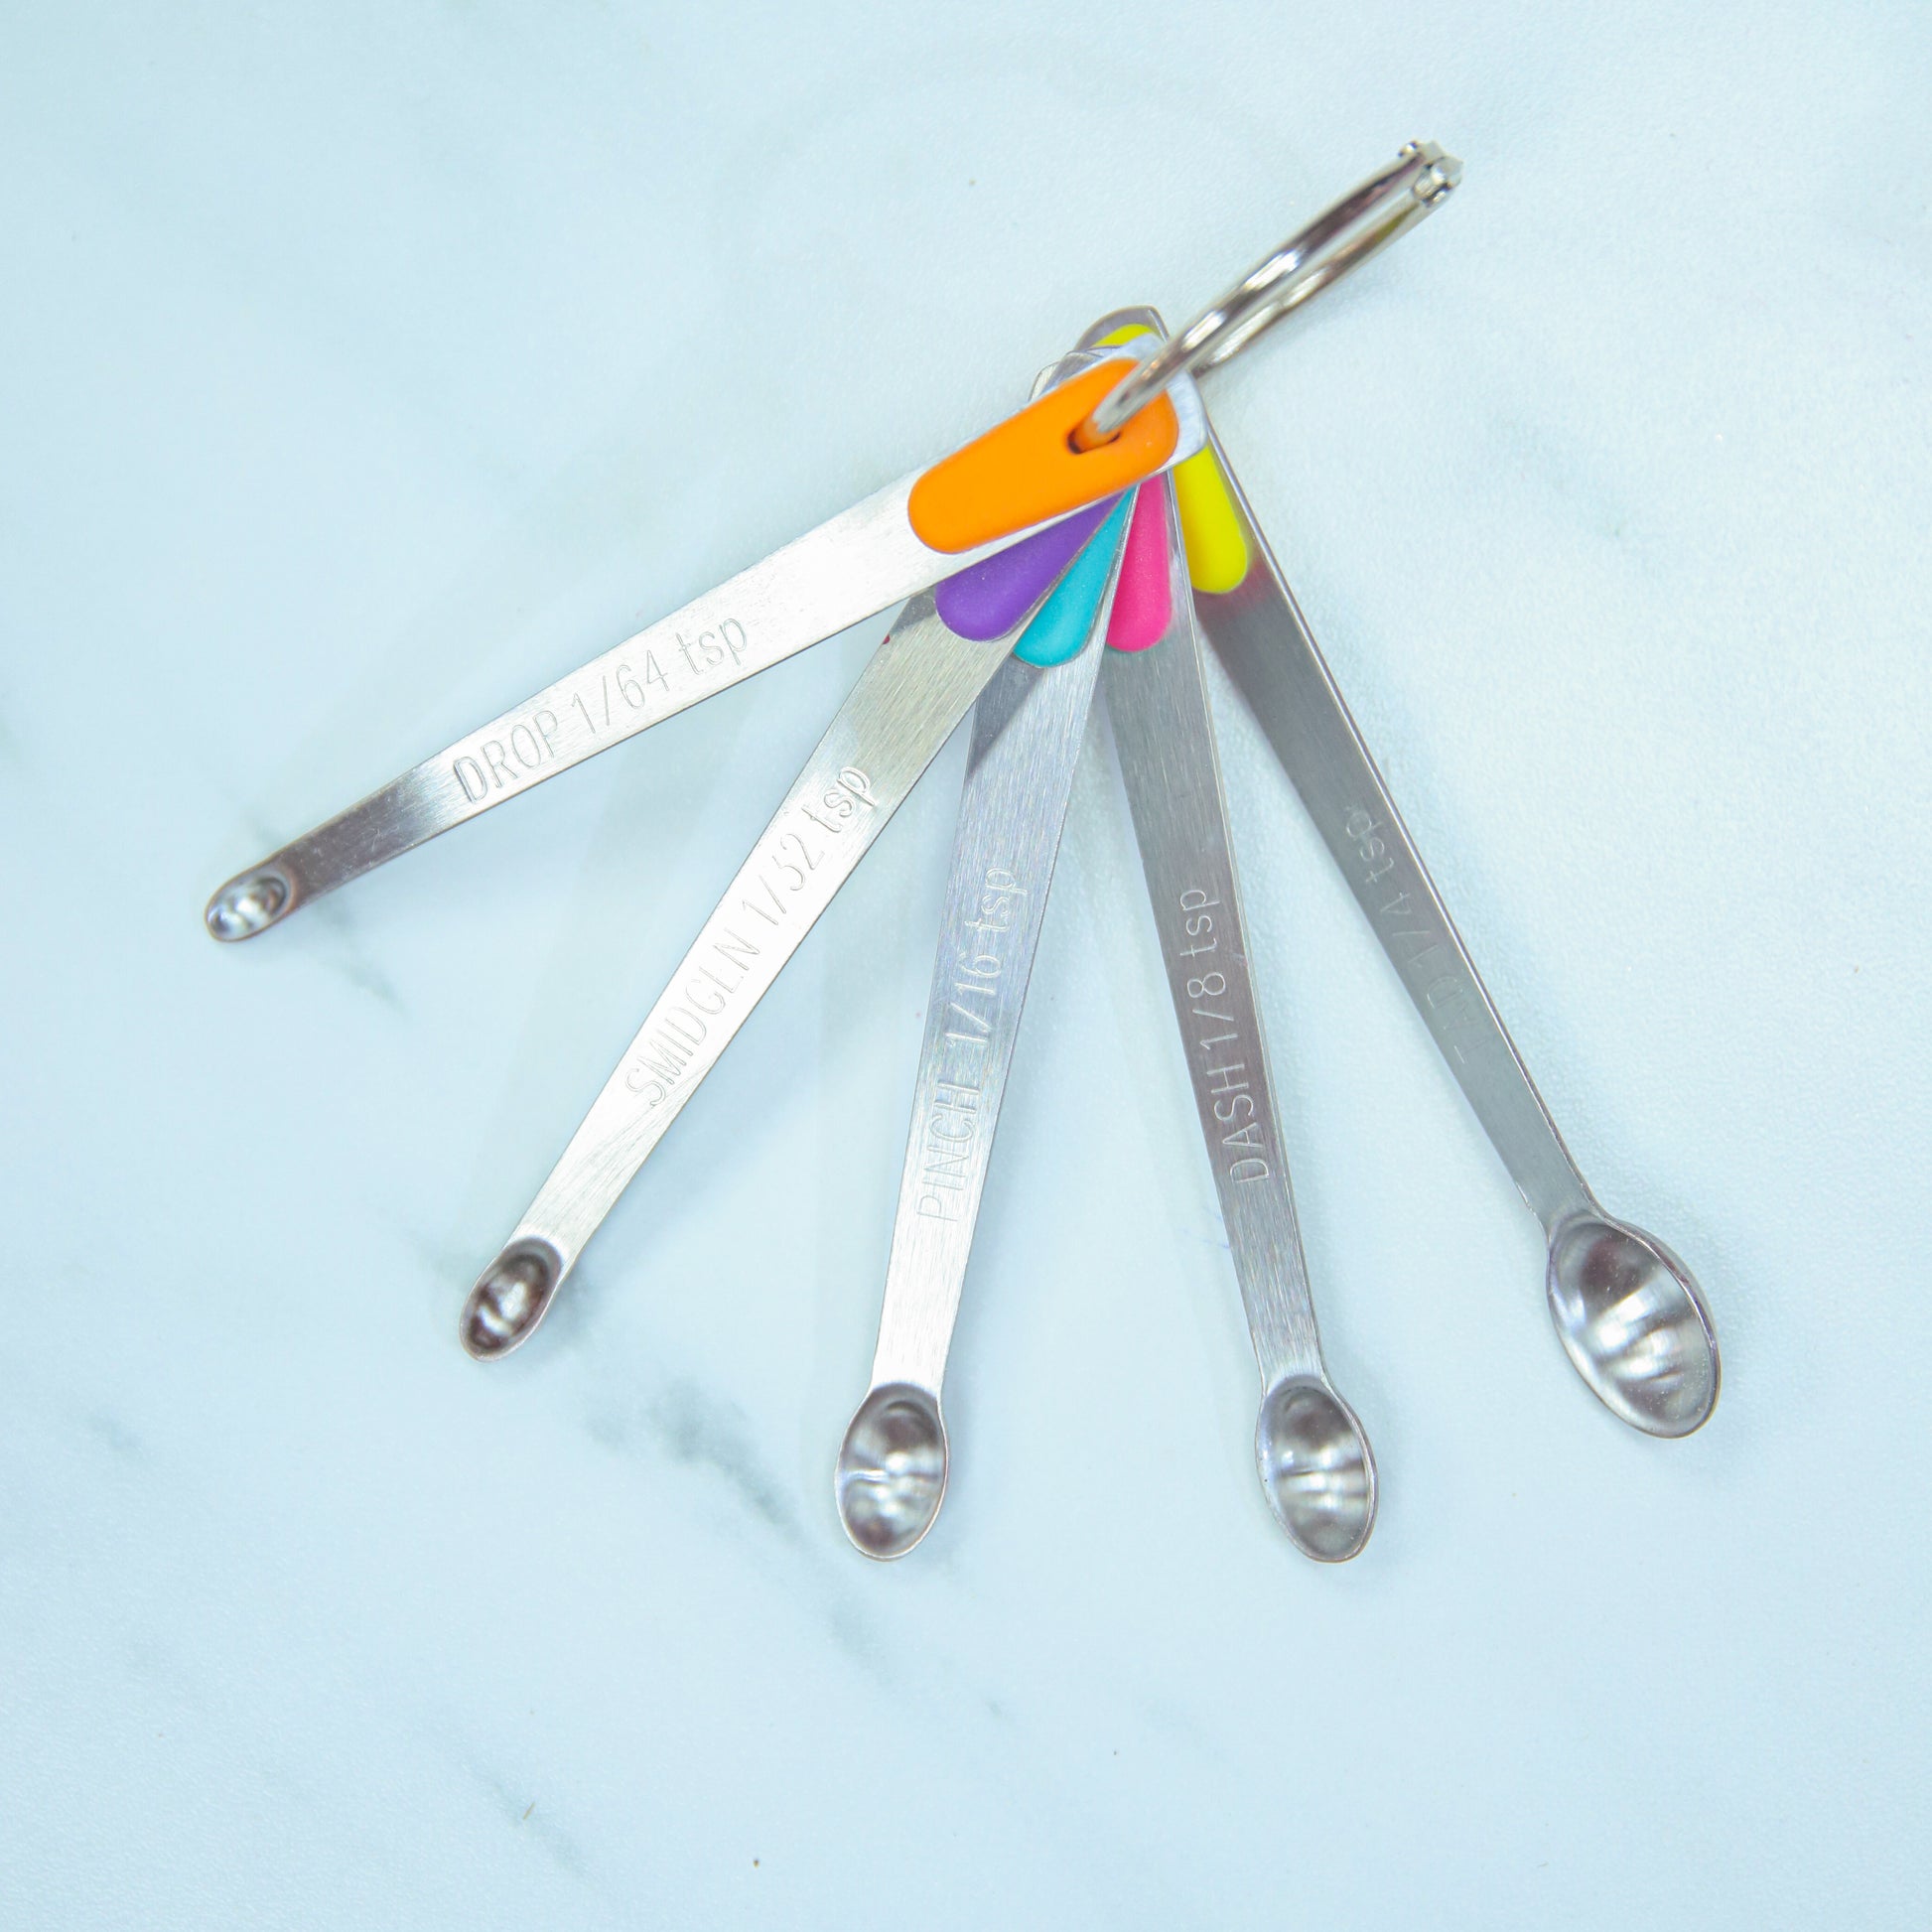 Mini Stainless Steel Measuring Spoons